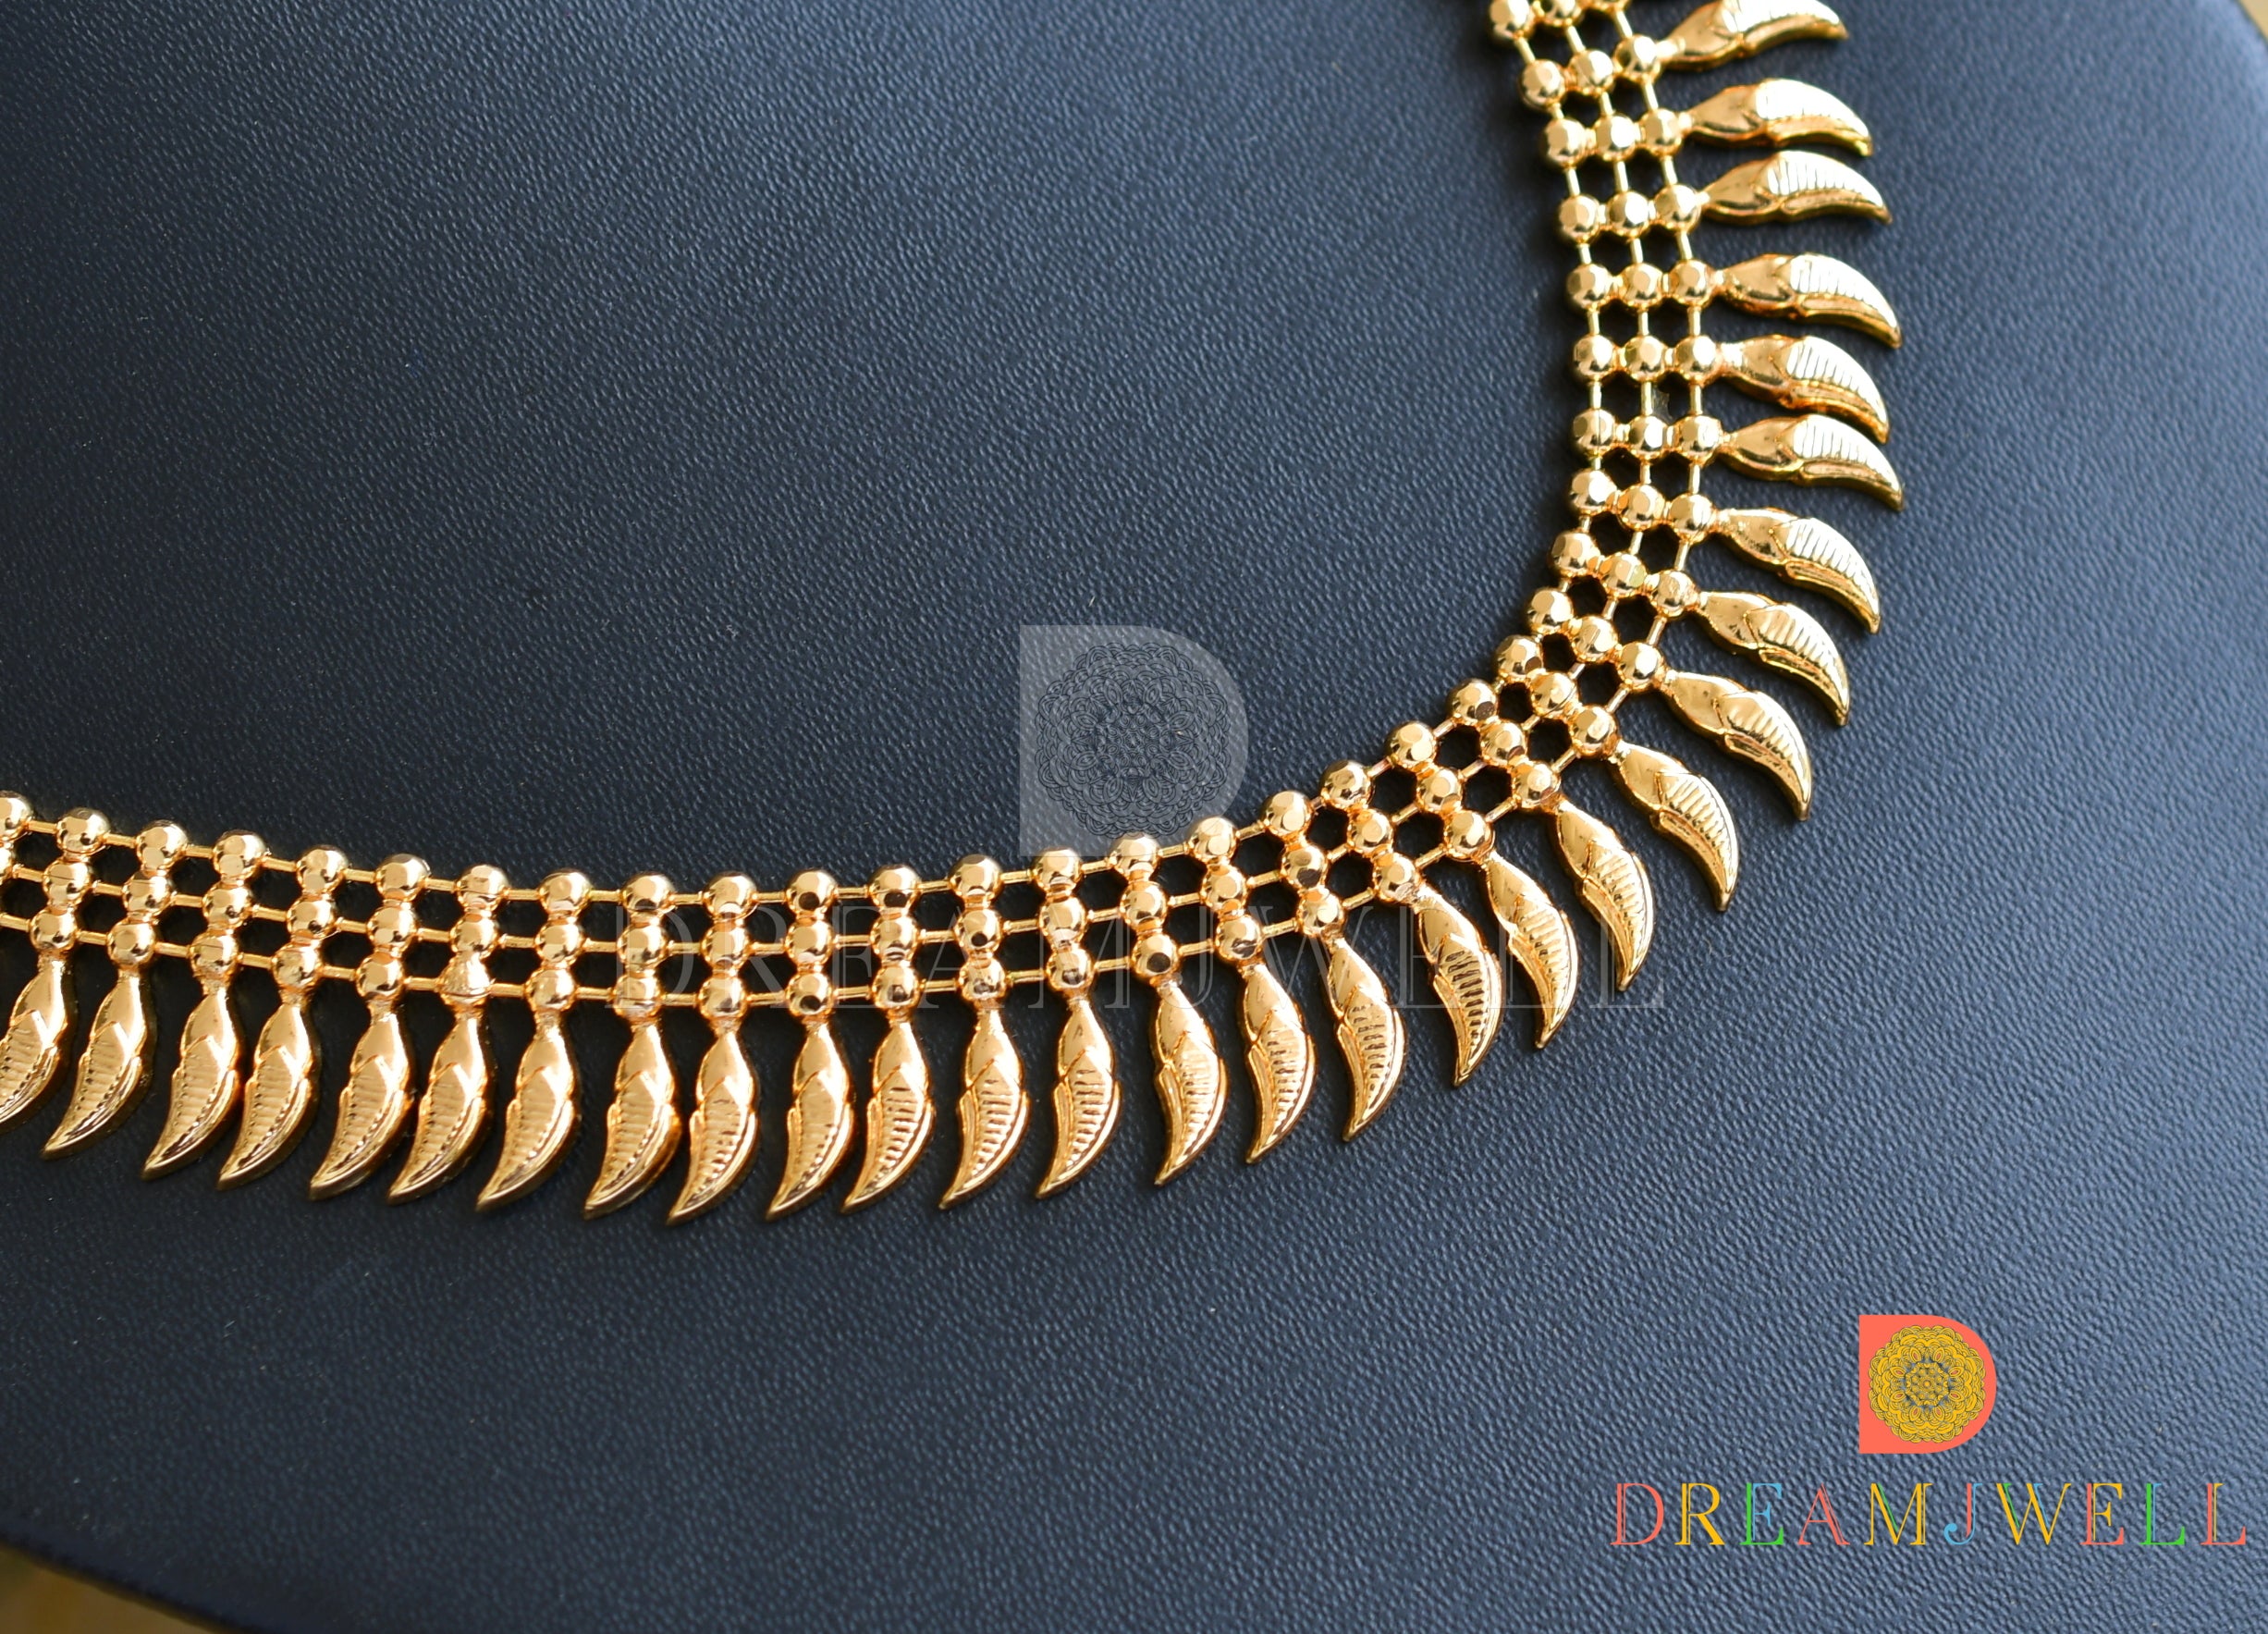 22K Kerala Gold Jewelry - Jewellery Designs